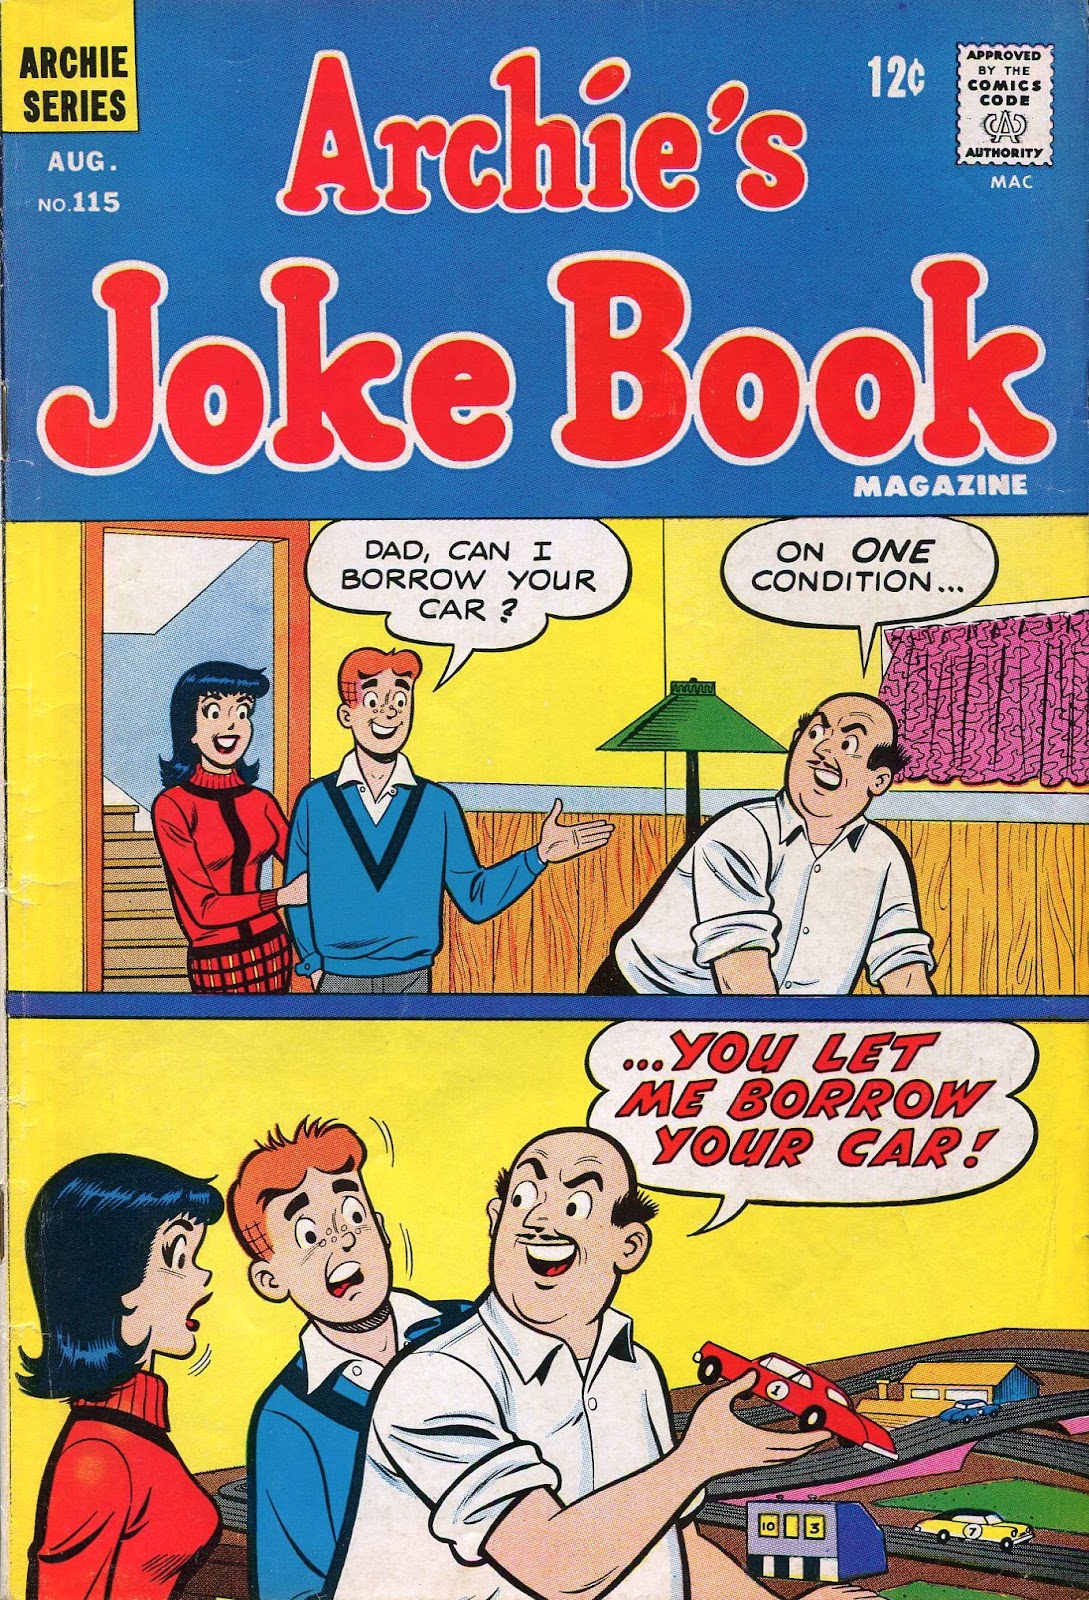 Archie's Joke Book Magazine issue 115 - Page 1